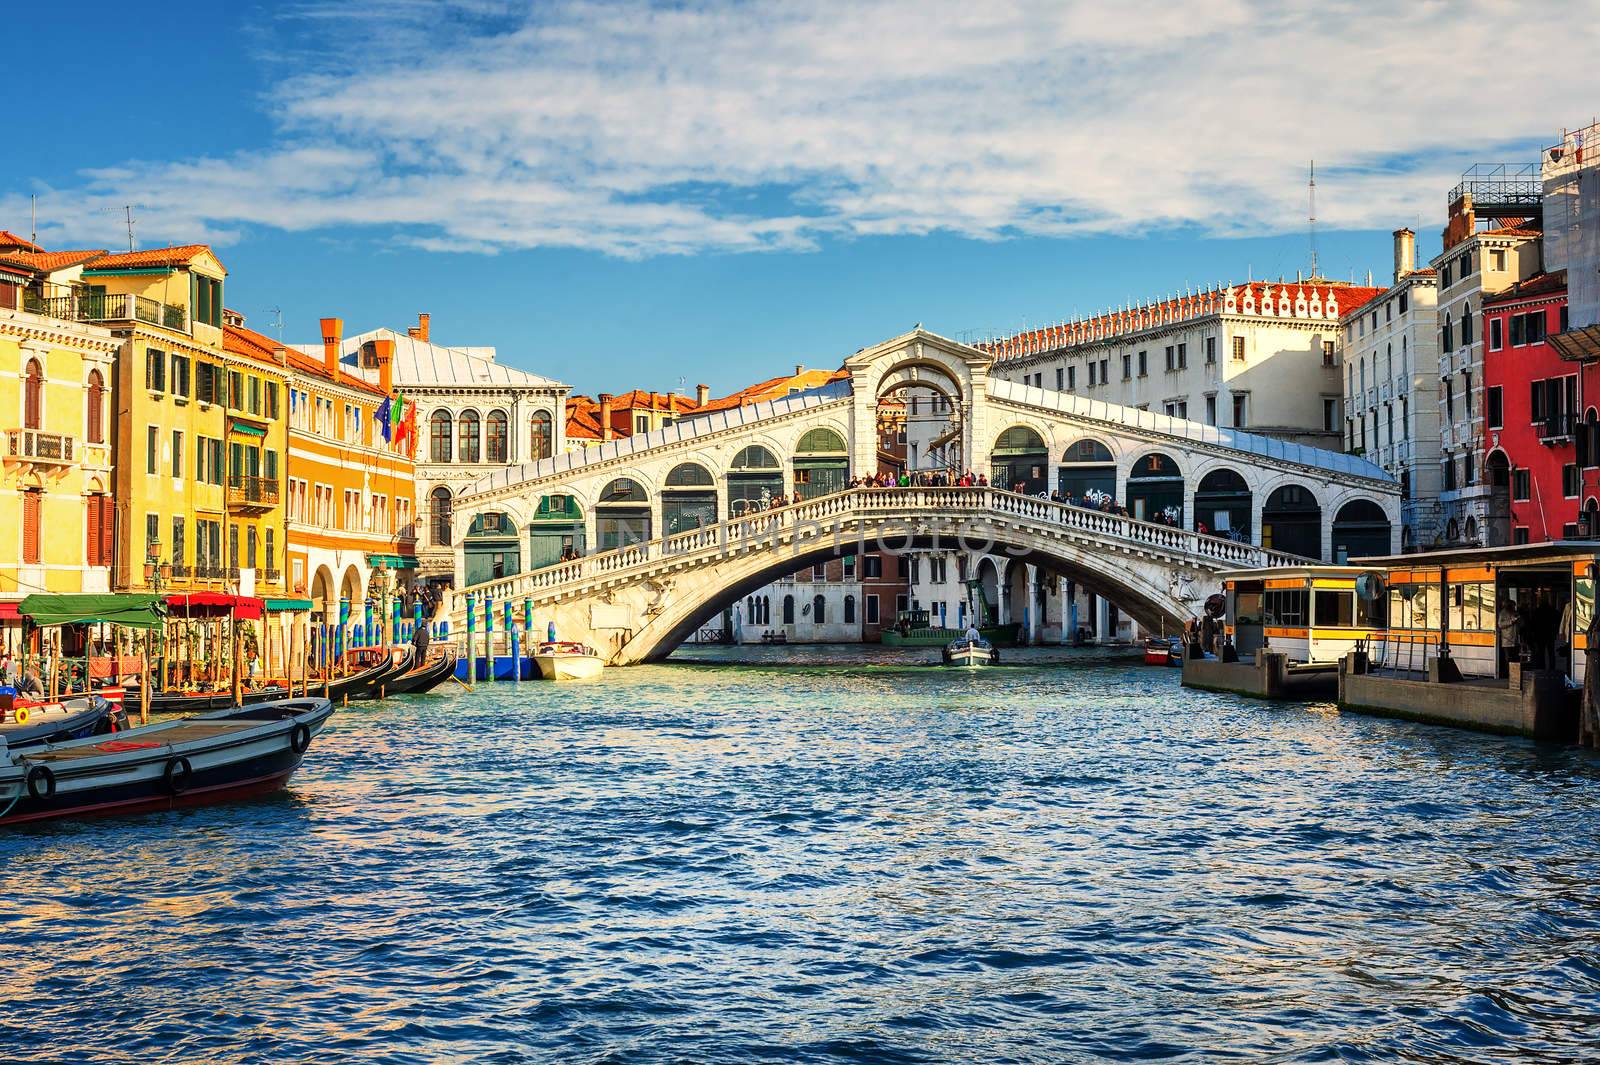 The Grand Canal and Rialto bridge, Venice, Italy by GlobePhotos